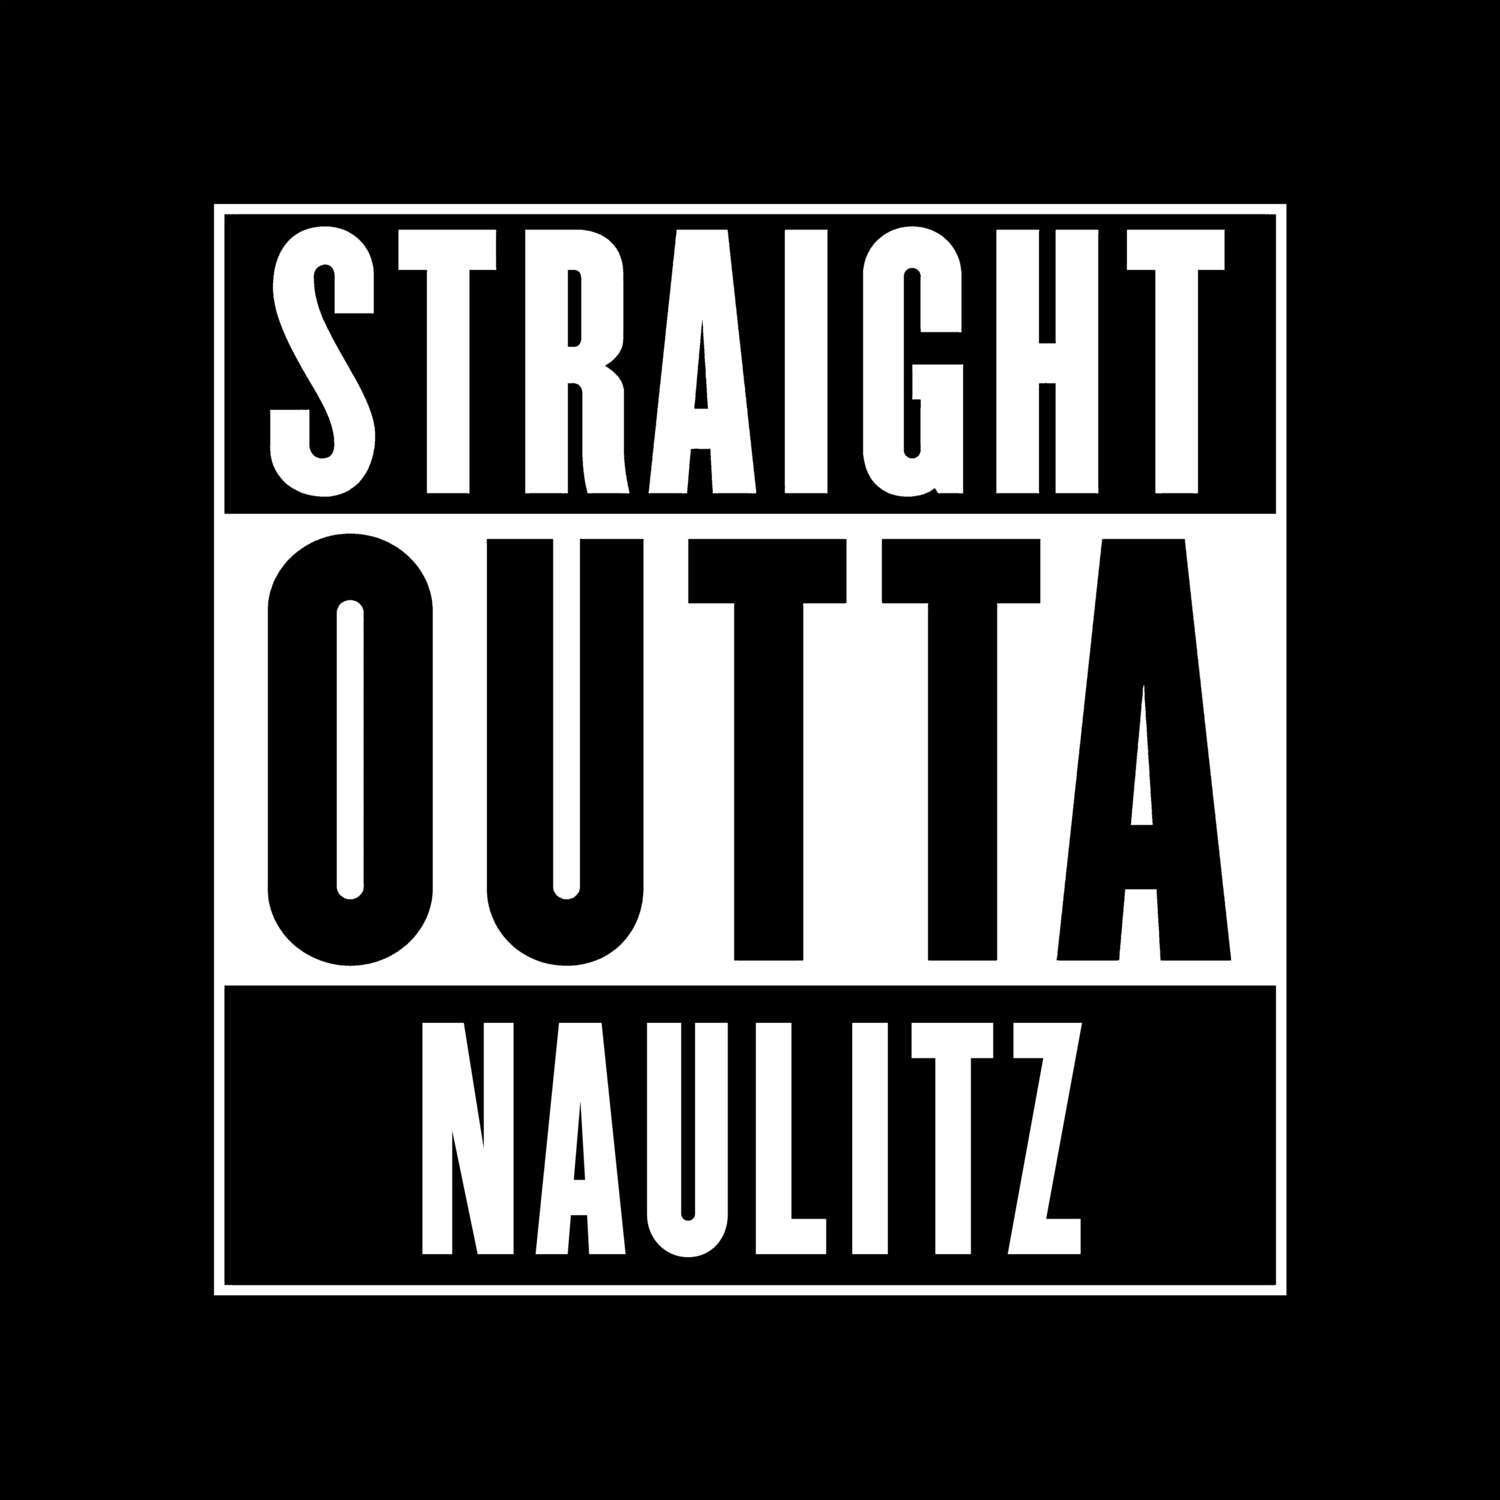 Naulitz T-Shirt »Straight Outta«